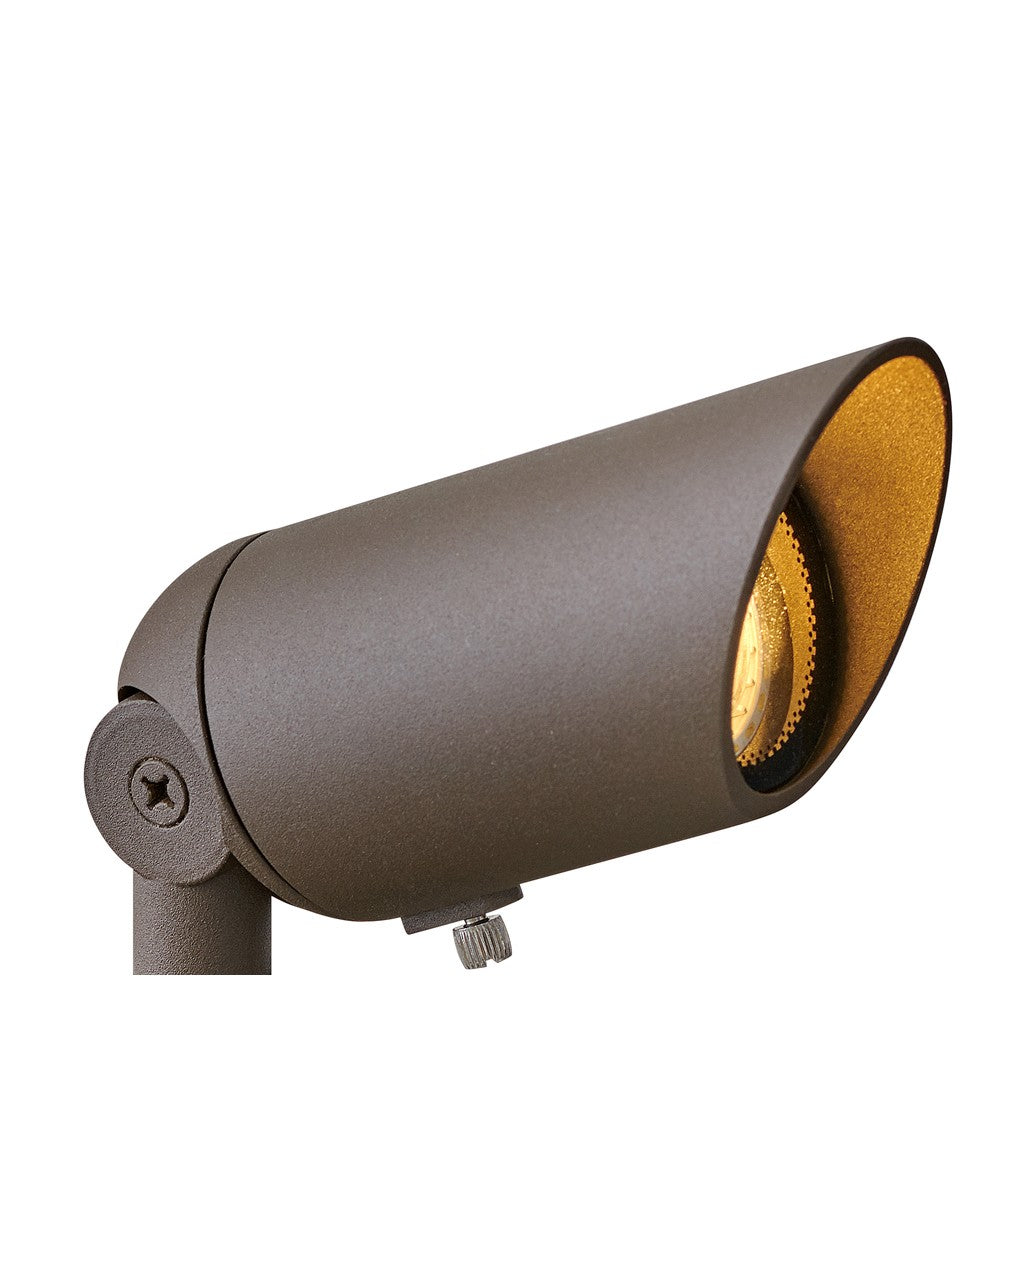 Hinkley - 1536TXB-LMA30K - LED Spot Light - Lumacore Accent Spot Light - Textured Brown